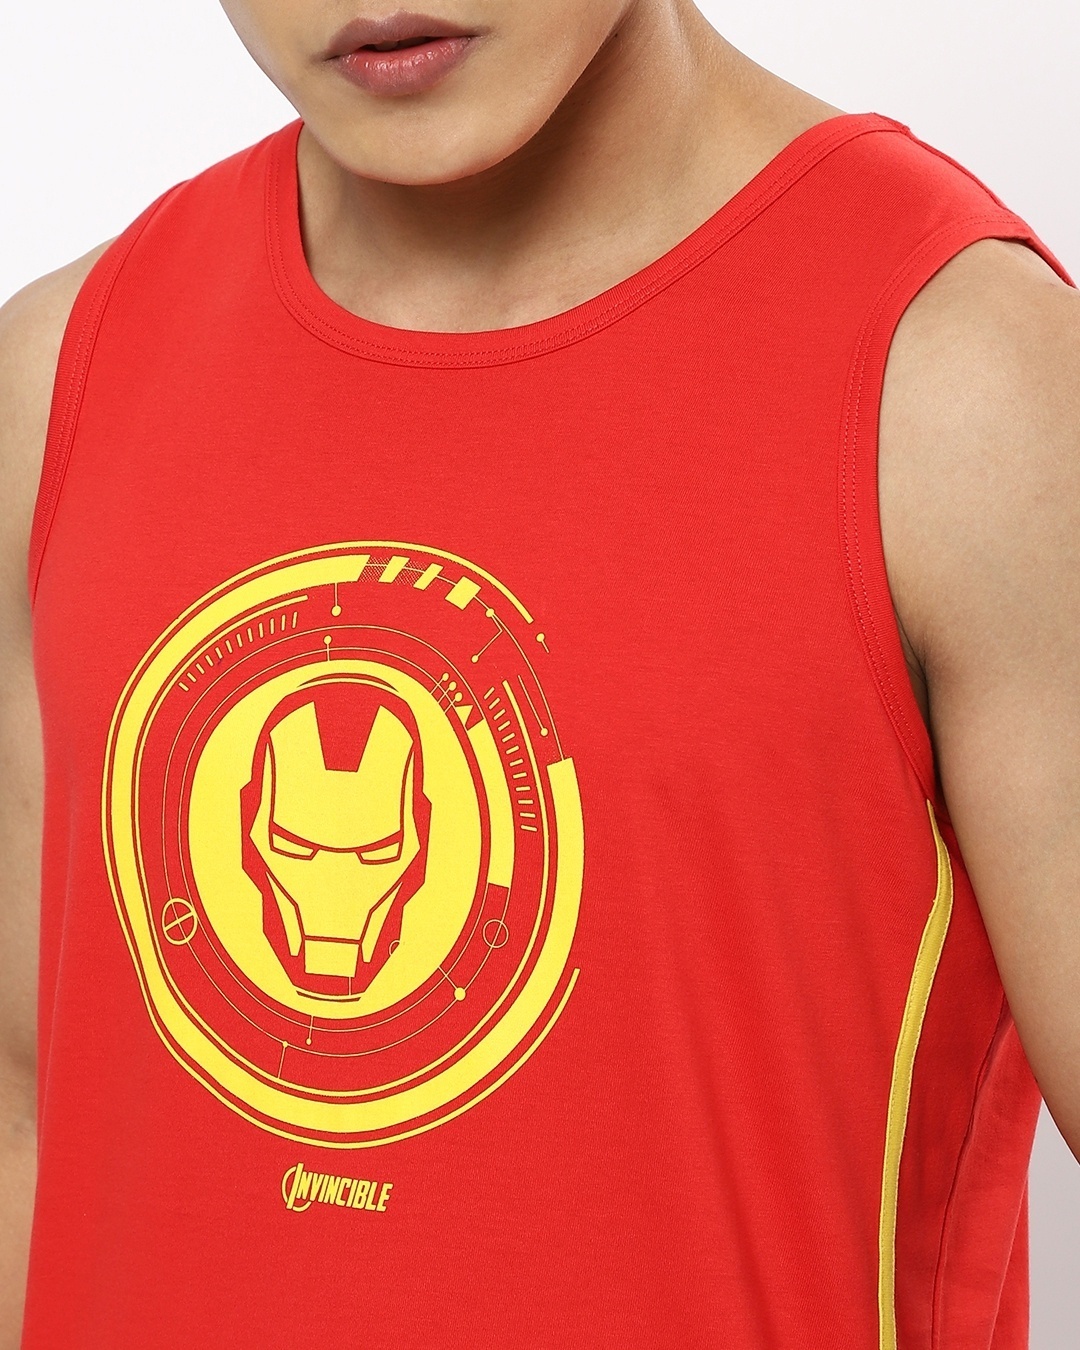 Shop Men's Red Iron Man Chest Printed Vest